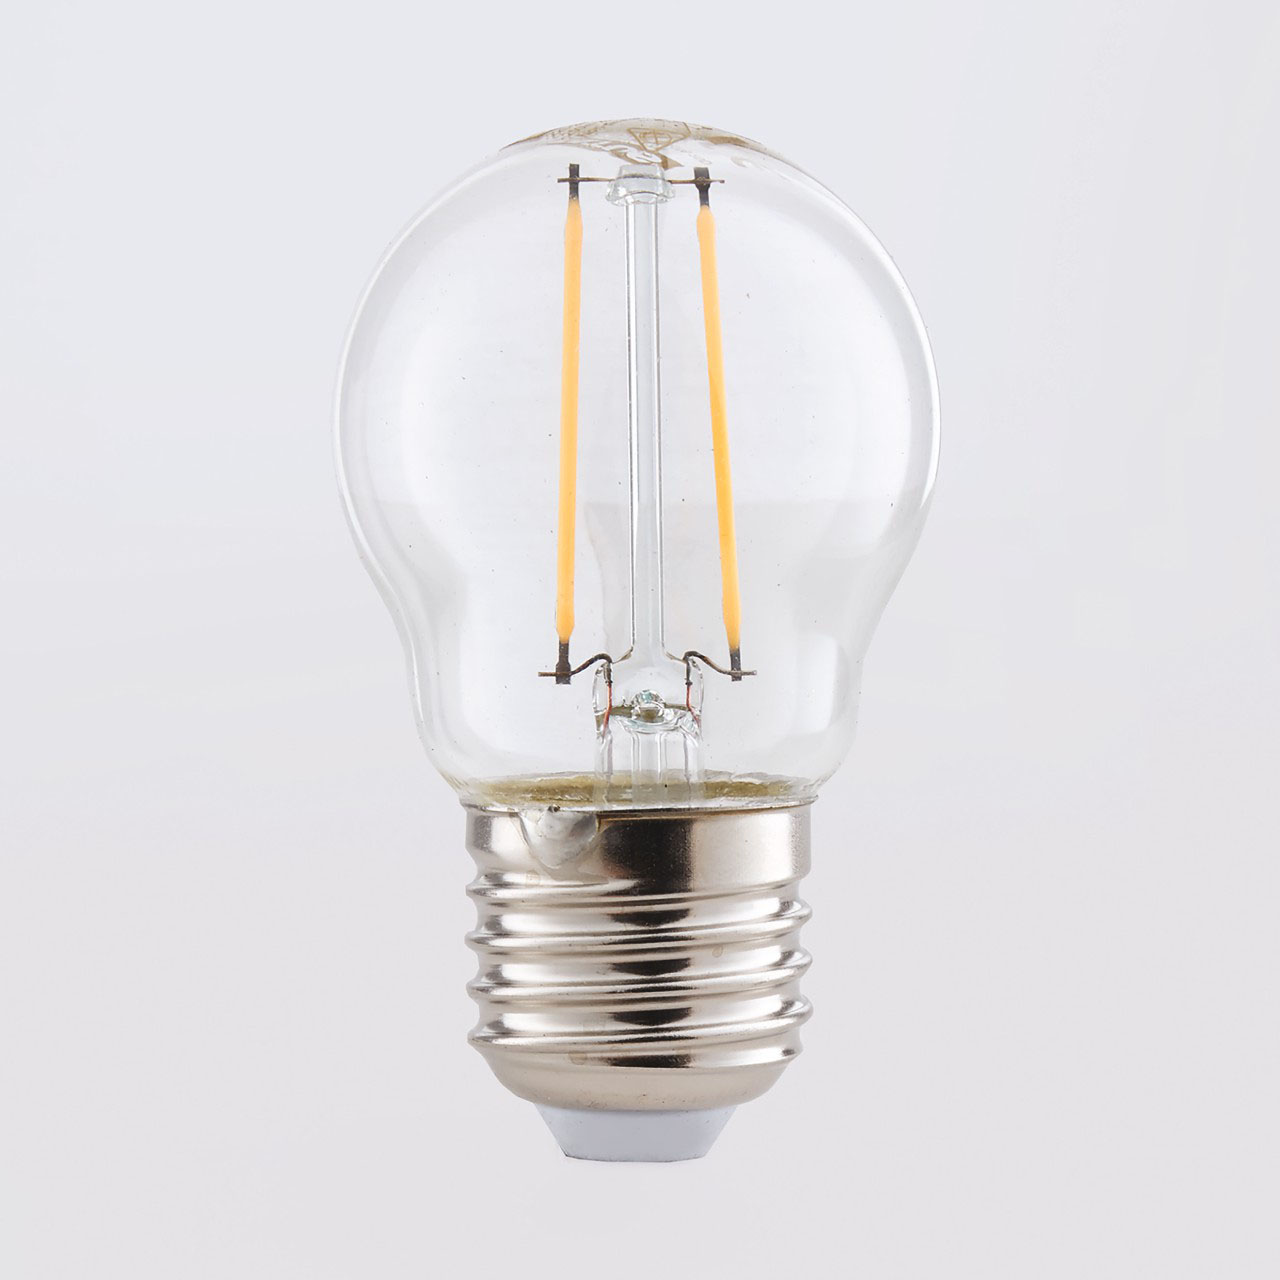 LED Filament Retro-style Light Bulbs